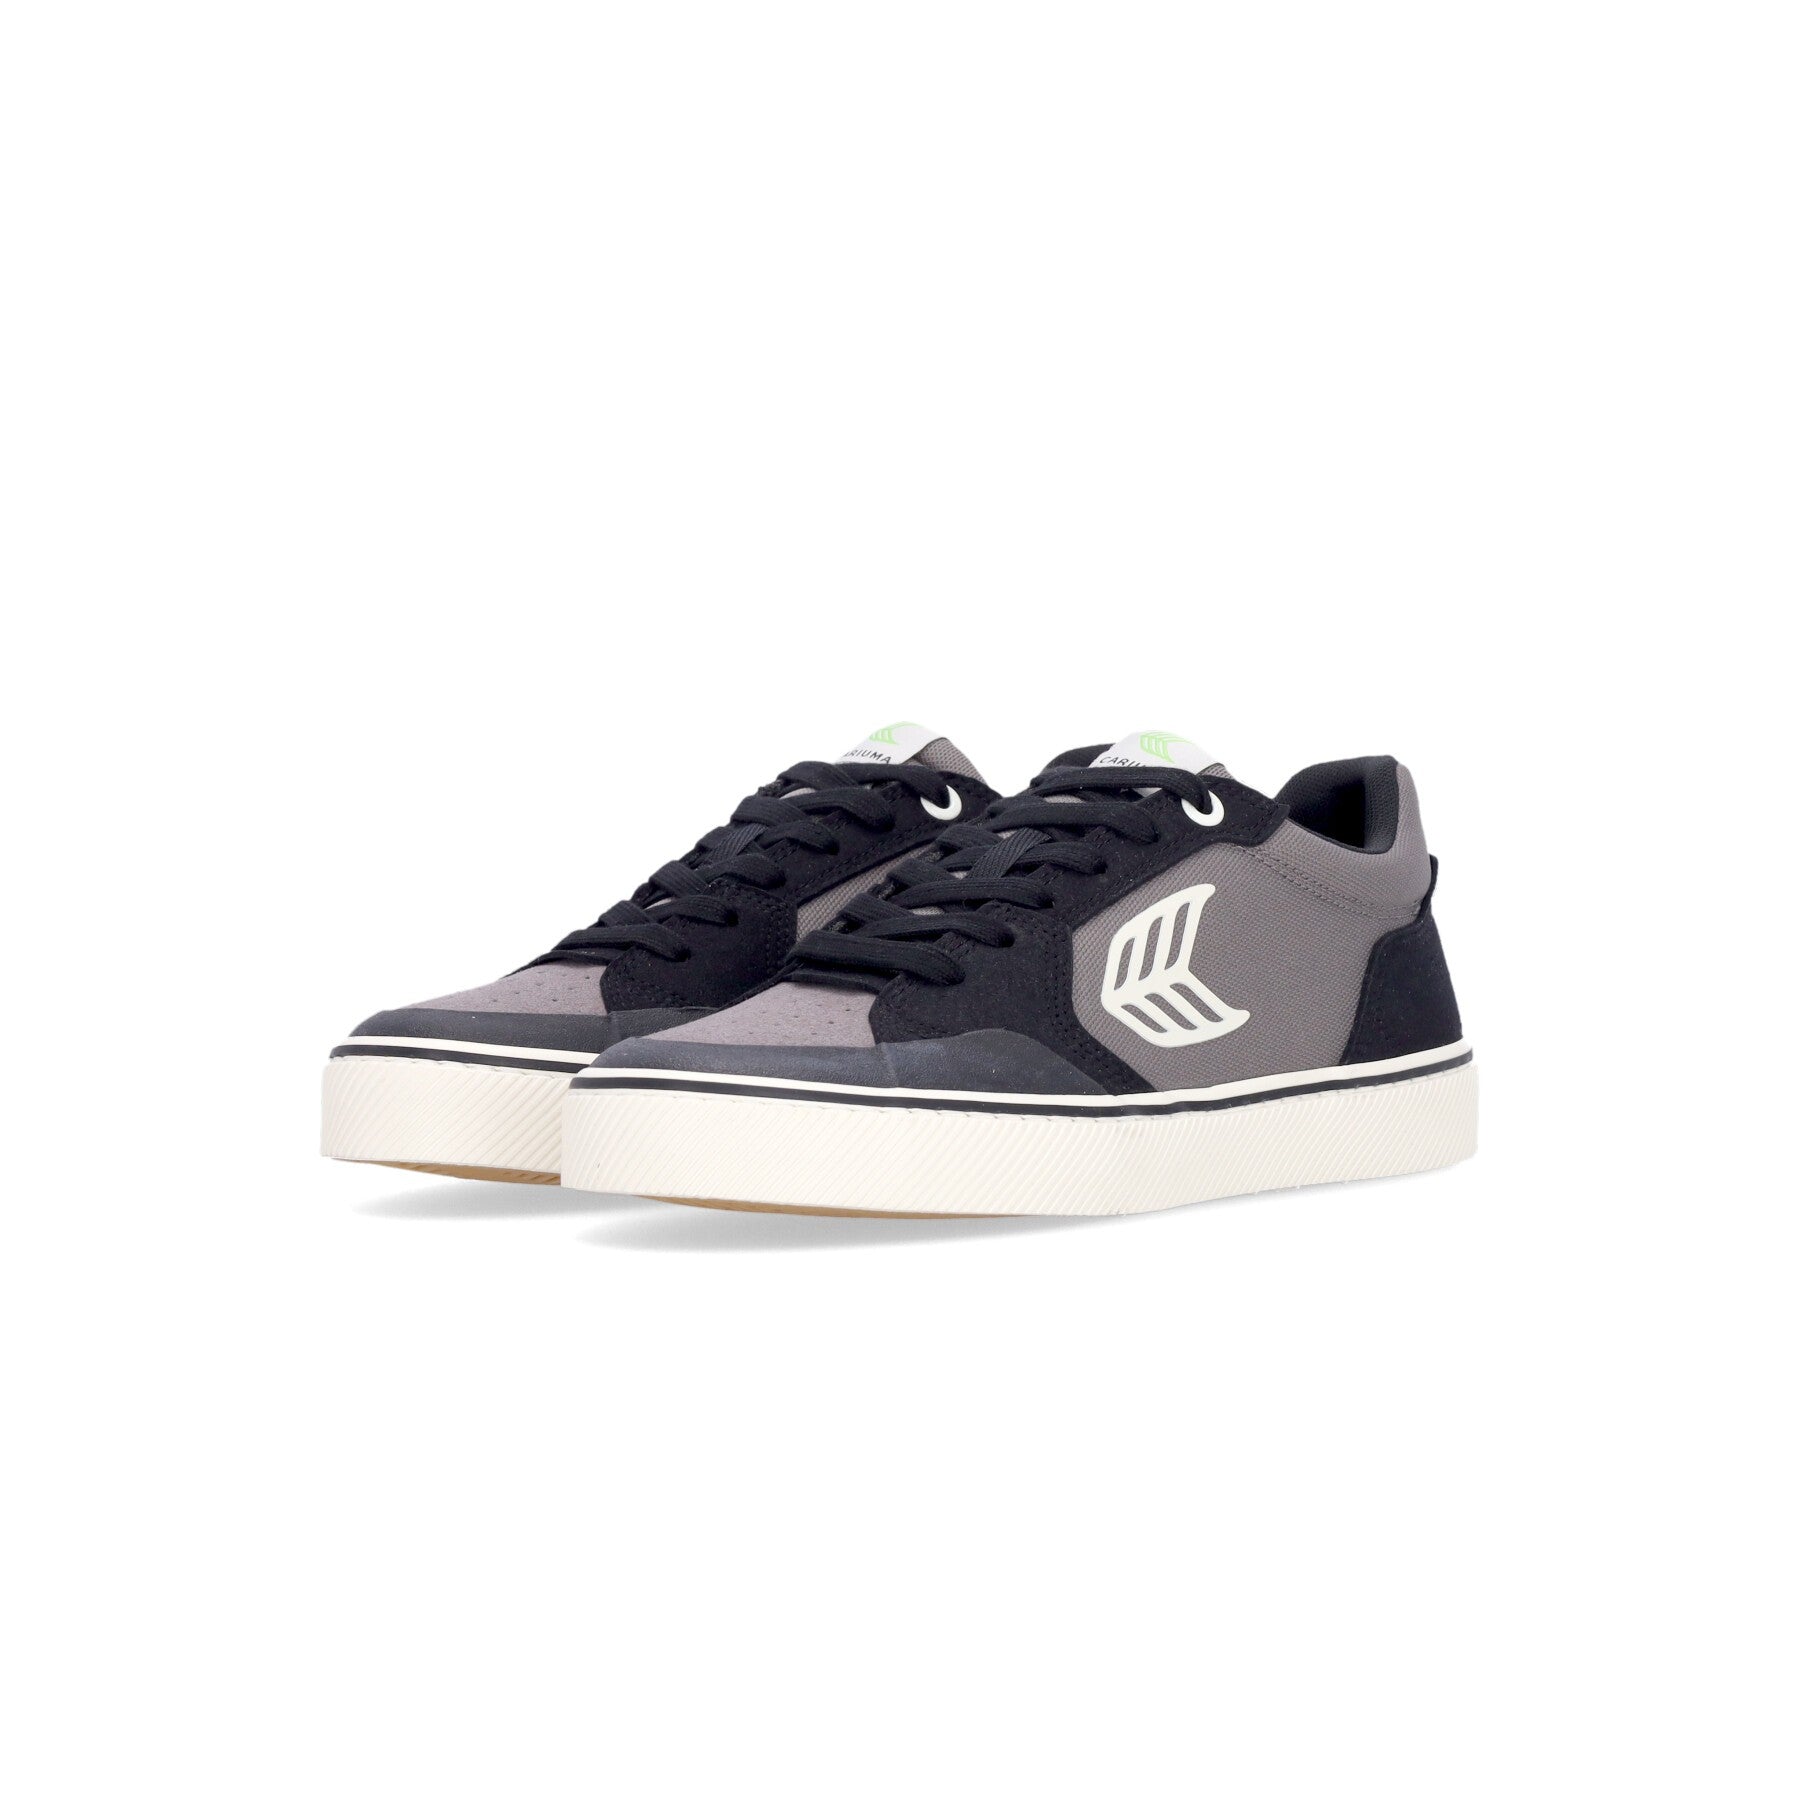 Vallely Men's Skate Shoes Black/charcoal Grey